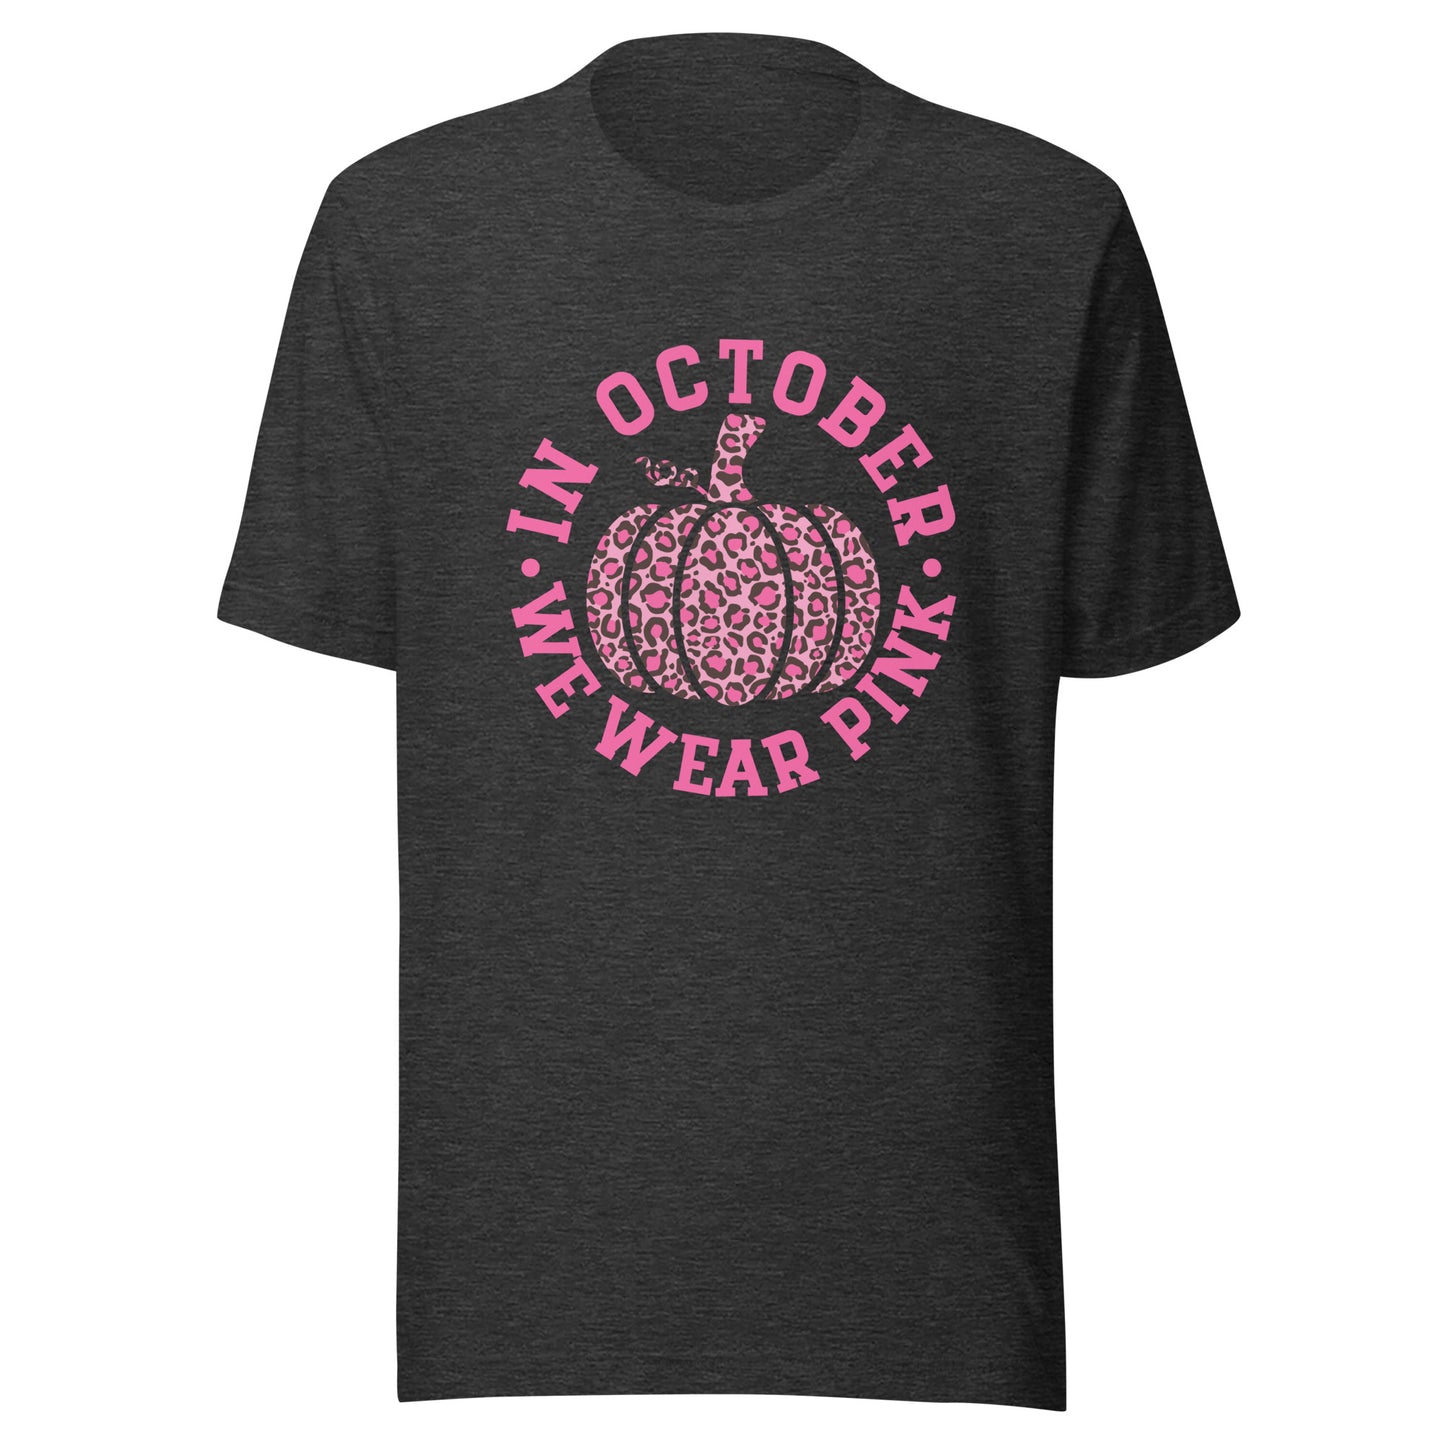 October We Wear Pink and Black Leopard Print Pumpkin - Breast Cancer Awareness Unisex T-shirt